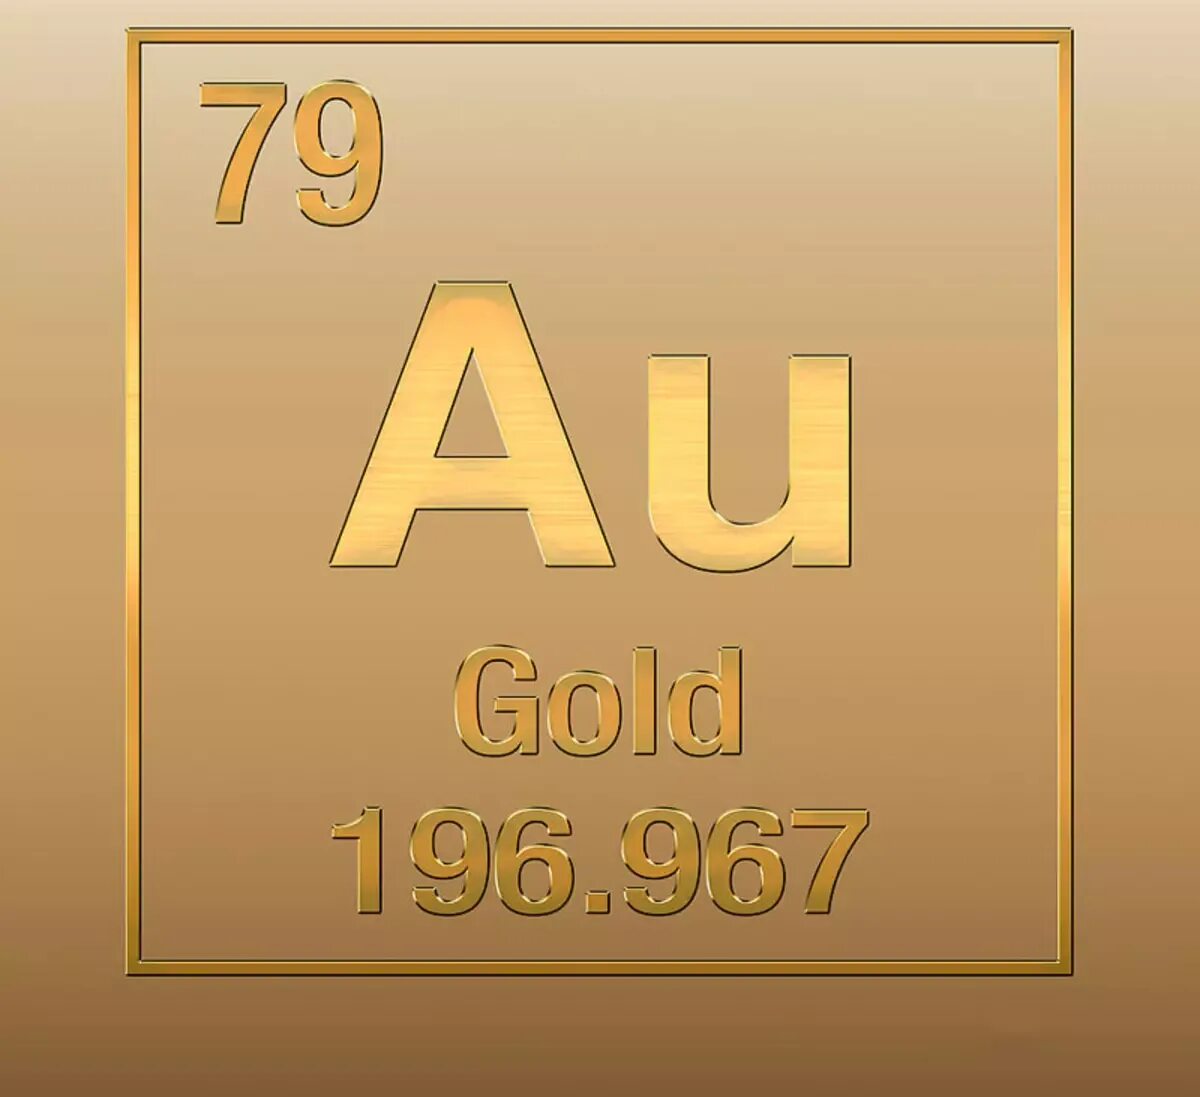 Аурум золото химический элемент. Золото элемент таблицы Менделеева. Аурум таблица Менделеева золото. Химический элемент золото в таблице Менделеева.